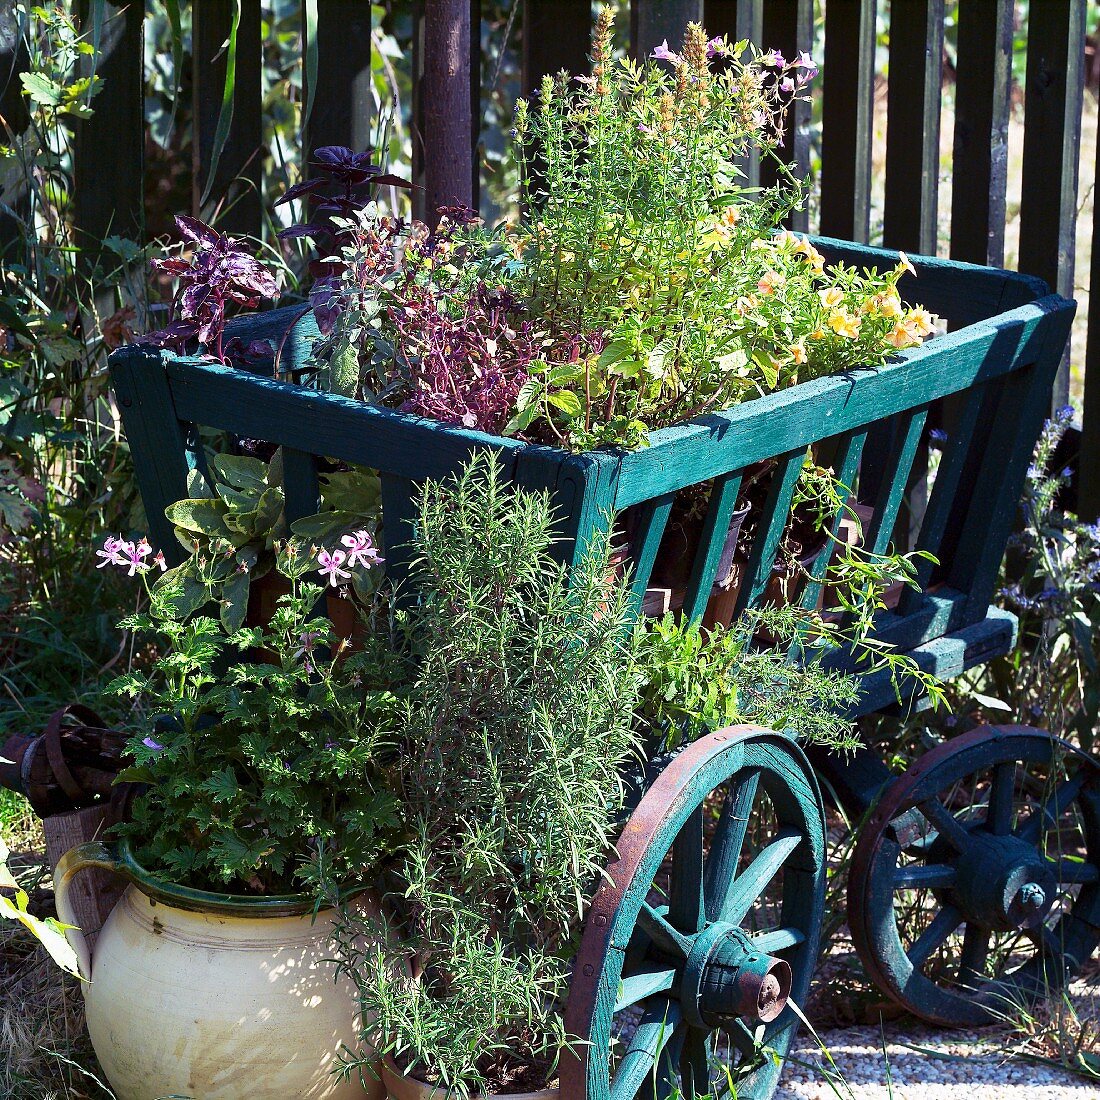 Fresh herb pots decoratively arranged in a wooden wheelbarrow